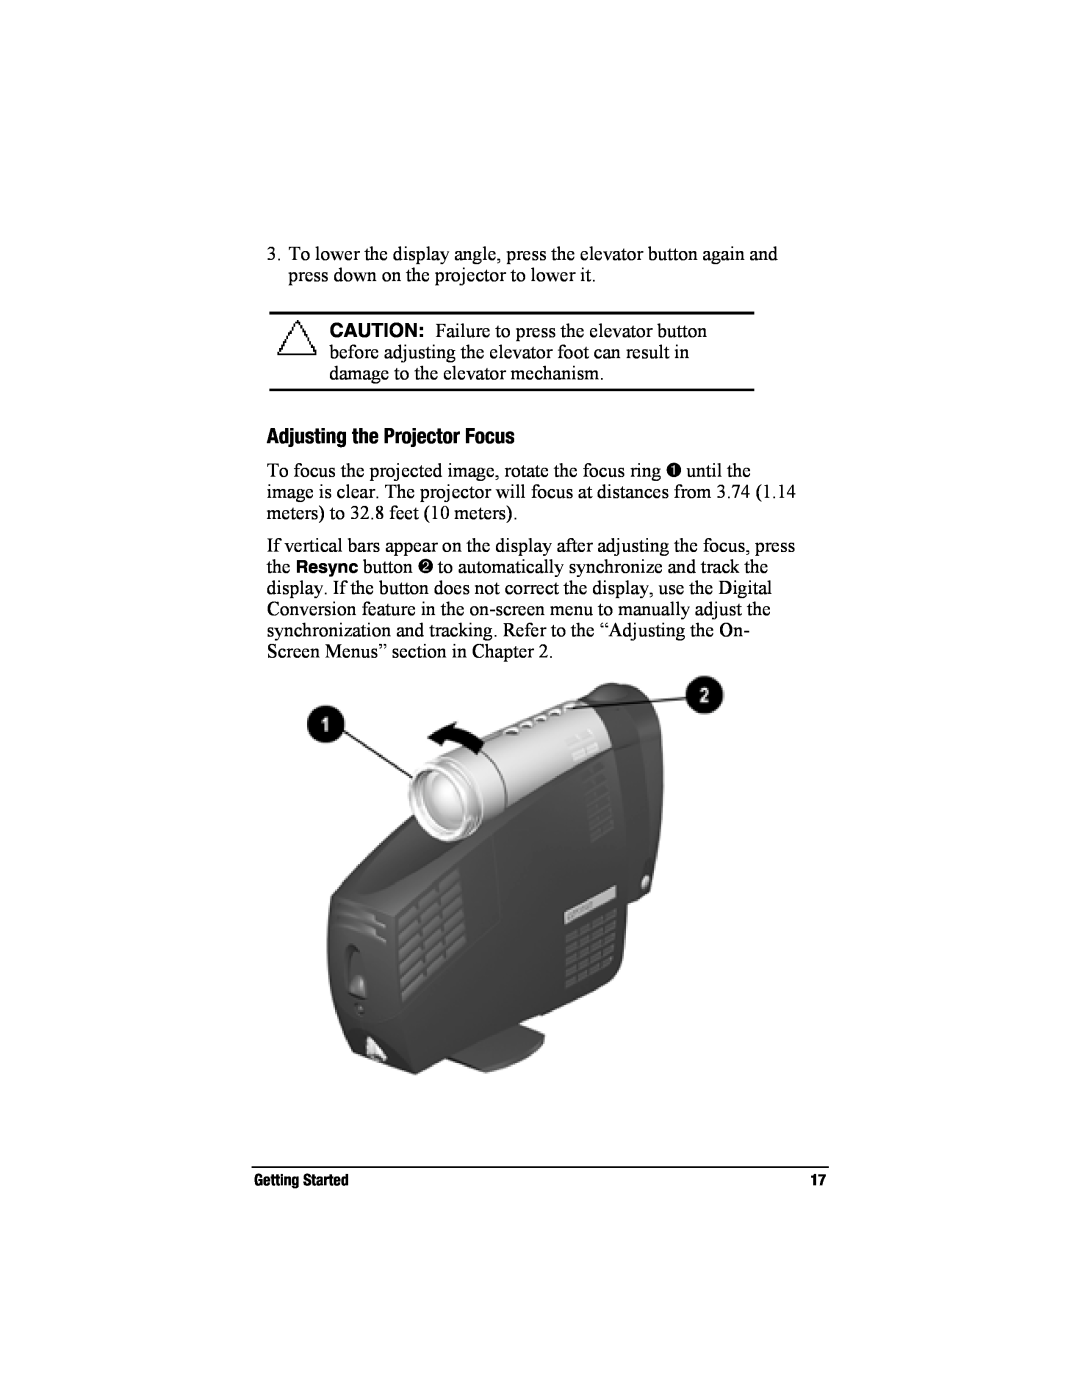 Compaq MP2800 warranty Adjusting the Projector Focus 